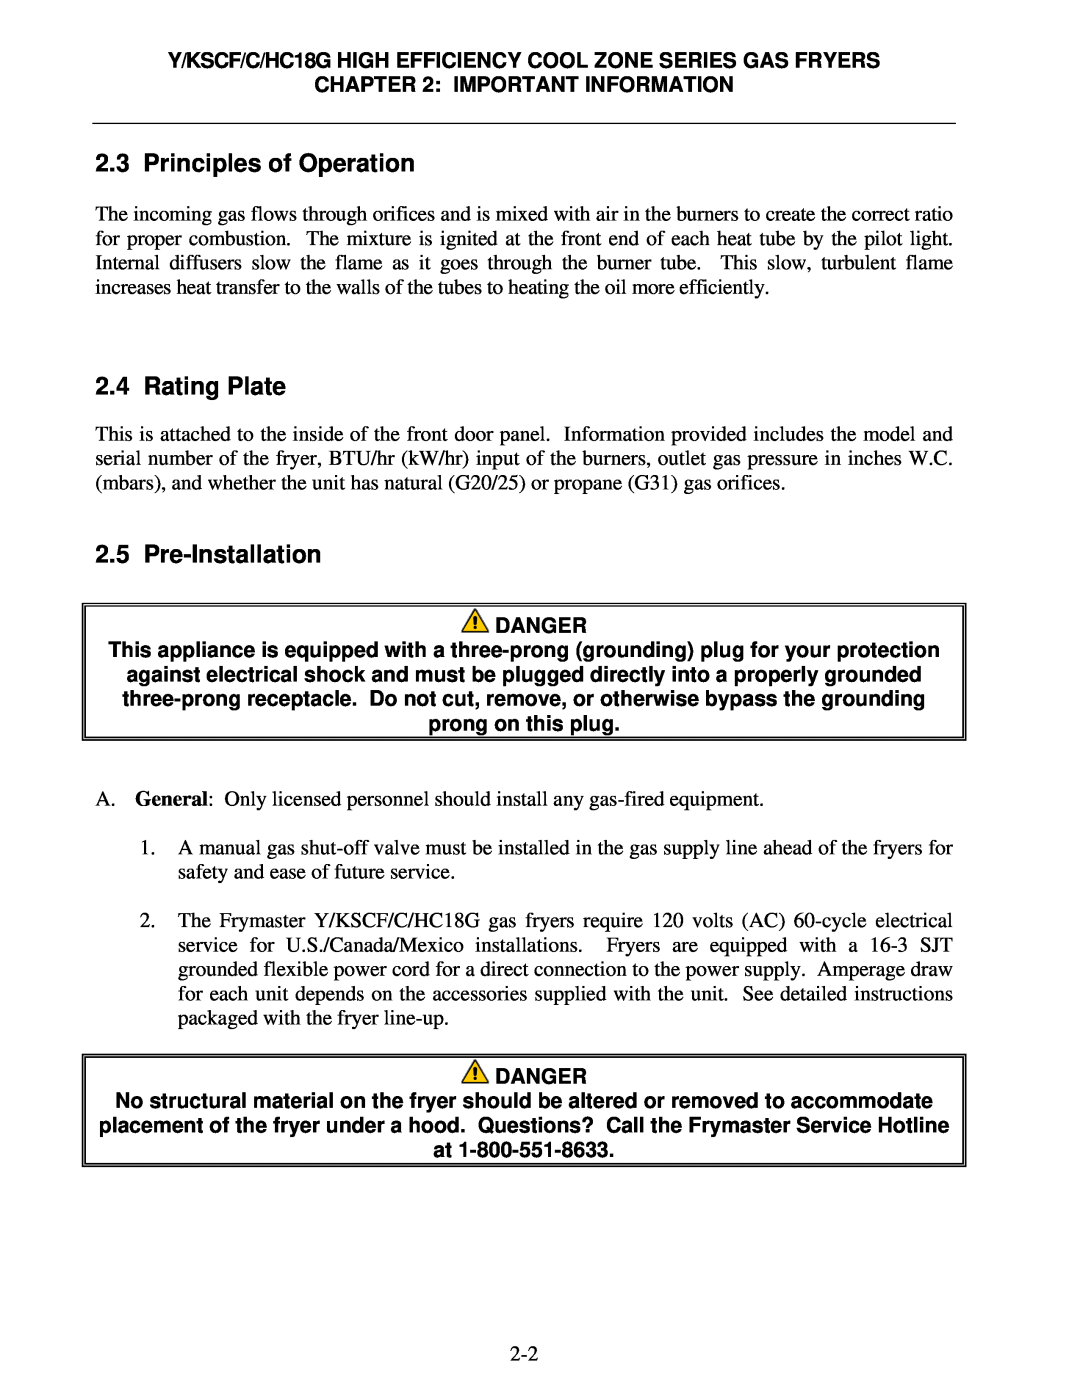 Frymaster Y/KSCF/C/HC18G Principles of Operation, Rating Plate, Pre-Installation, Important Information, Danger 